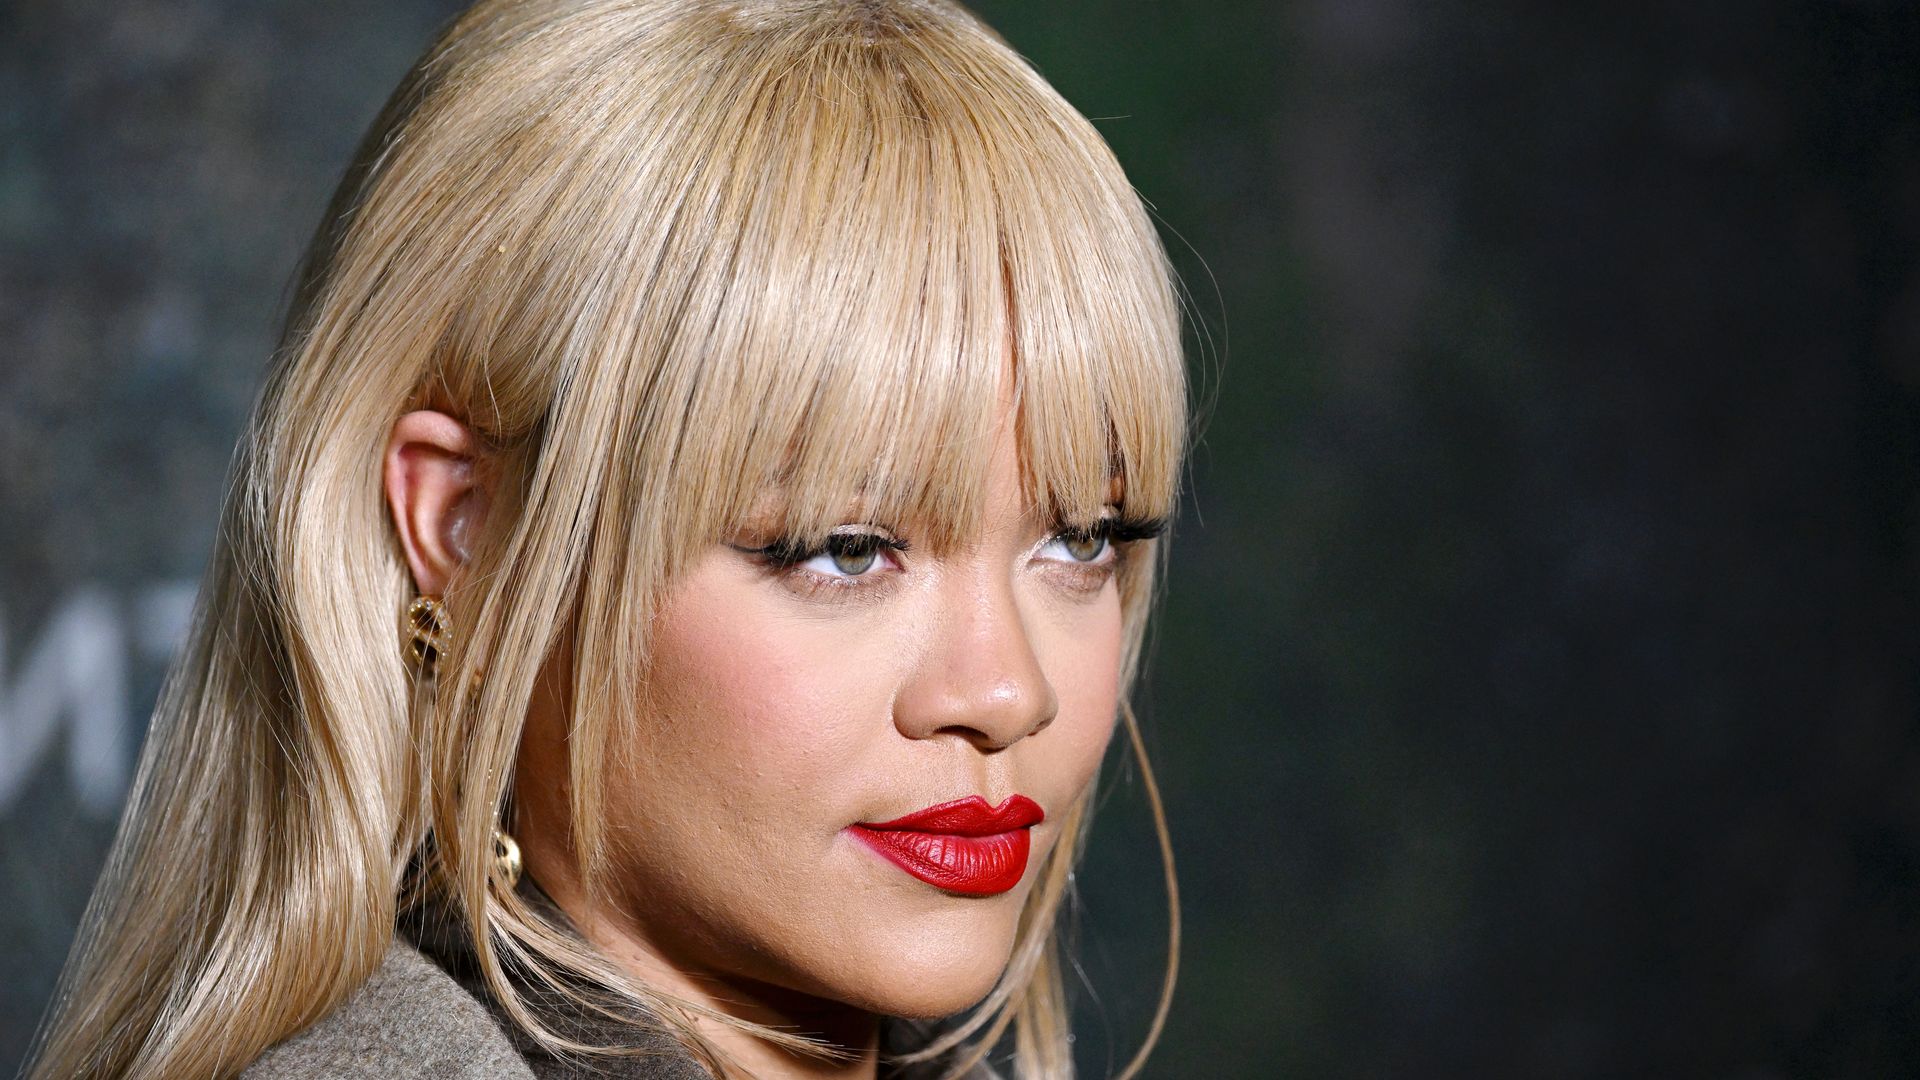 Rihanna stuns fans with dramatic hair transformation at lavish London event